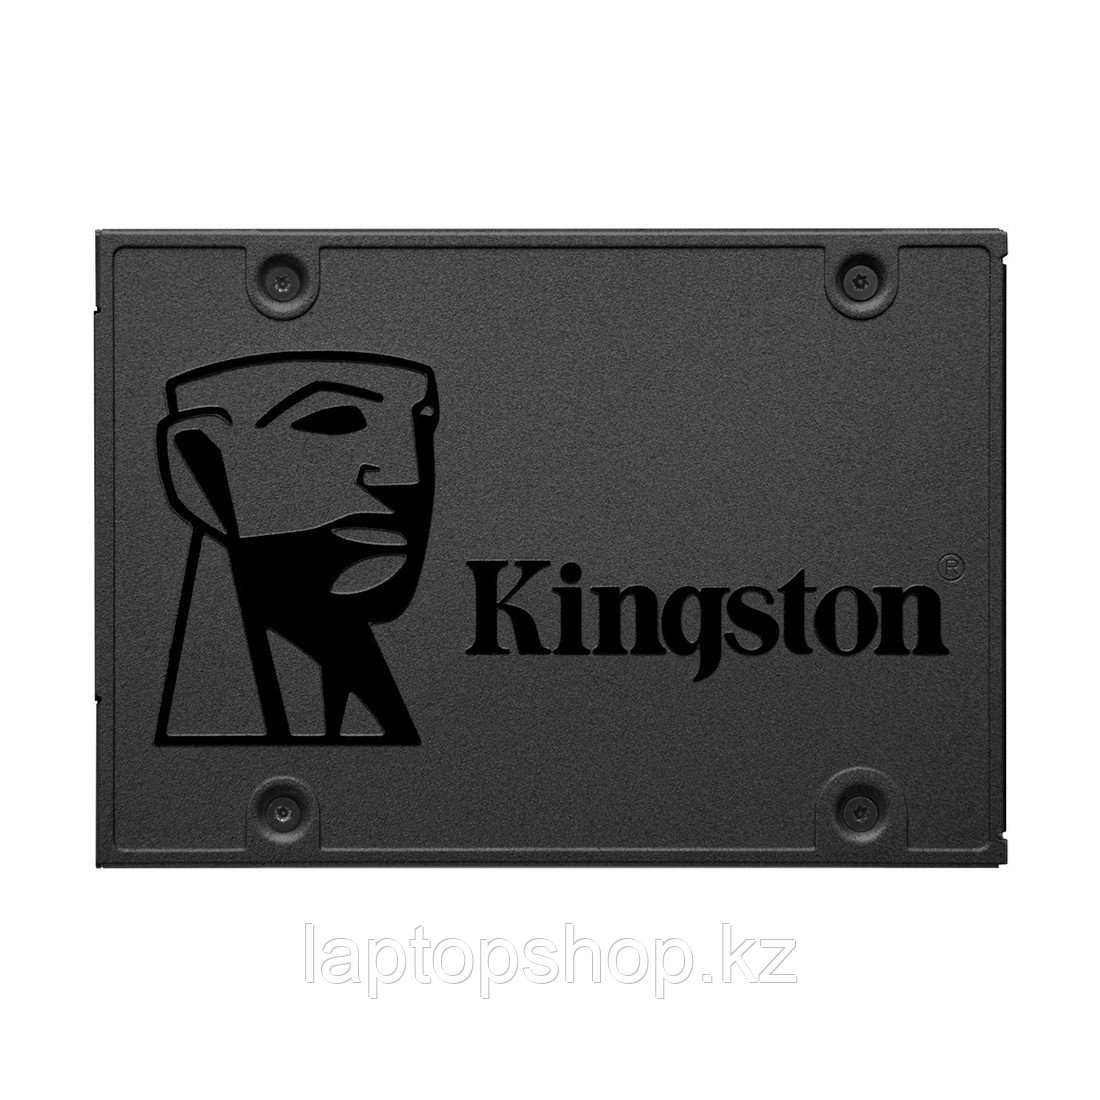 Kingston SSD 960 GB, SA400S37/960G, Sata 6Gb/s